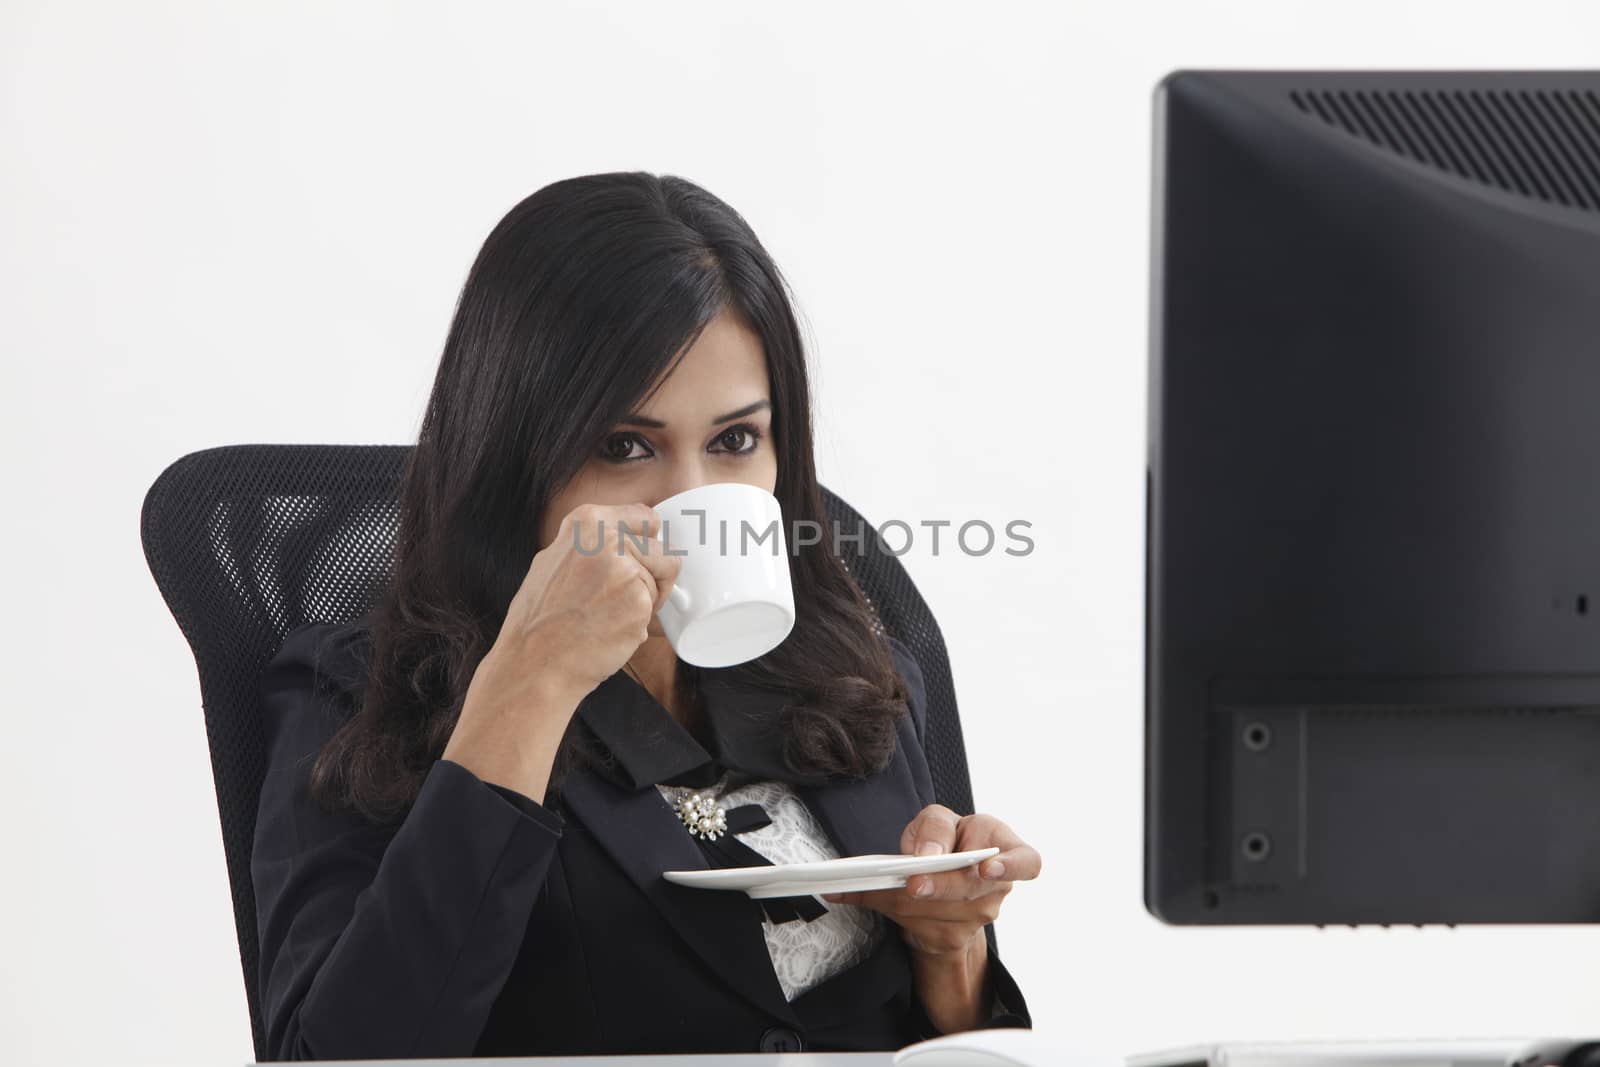 business woman sitting in front monitor having tea break